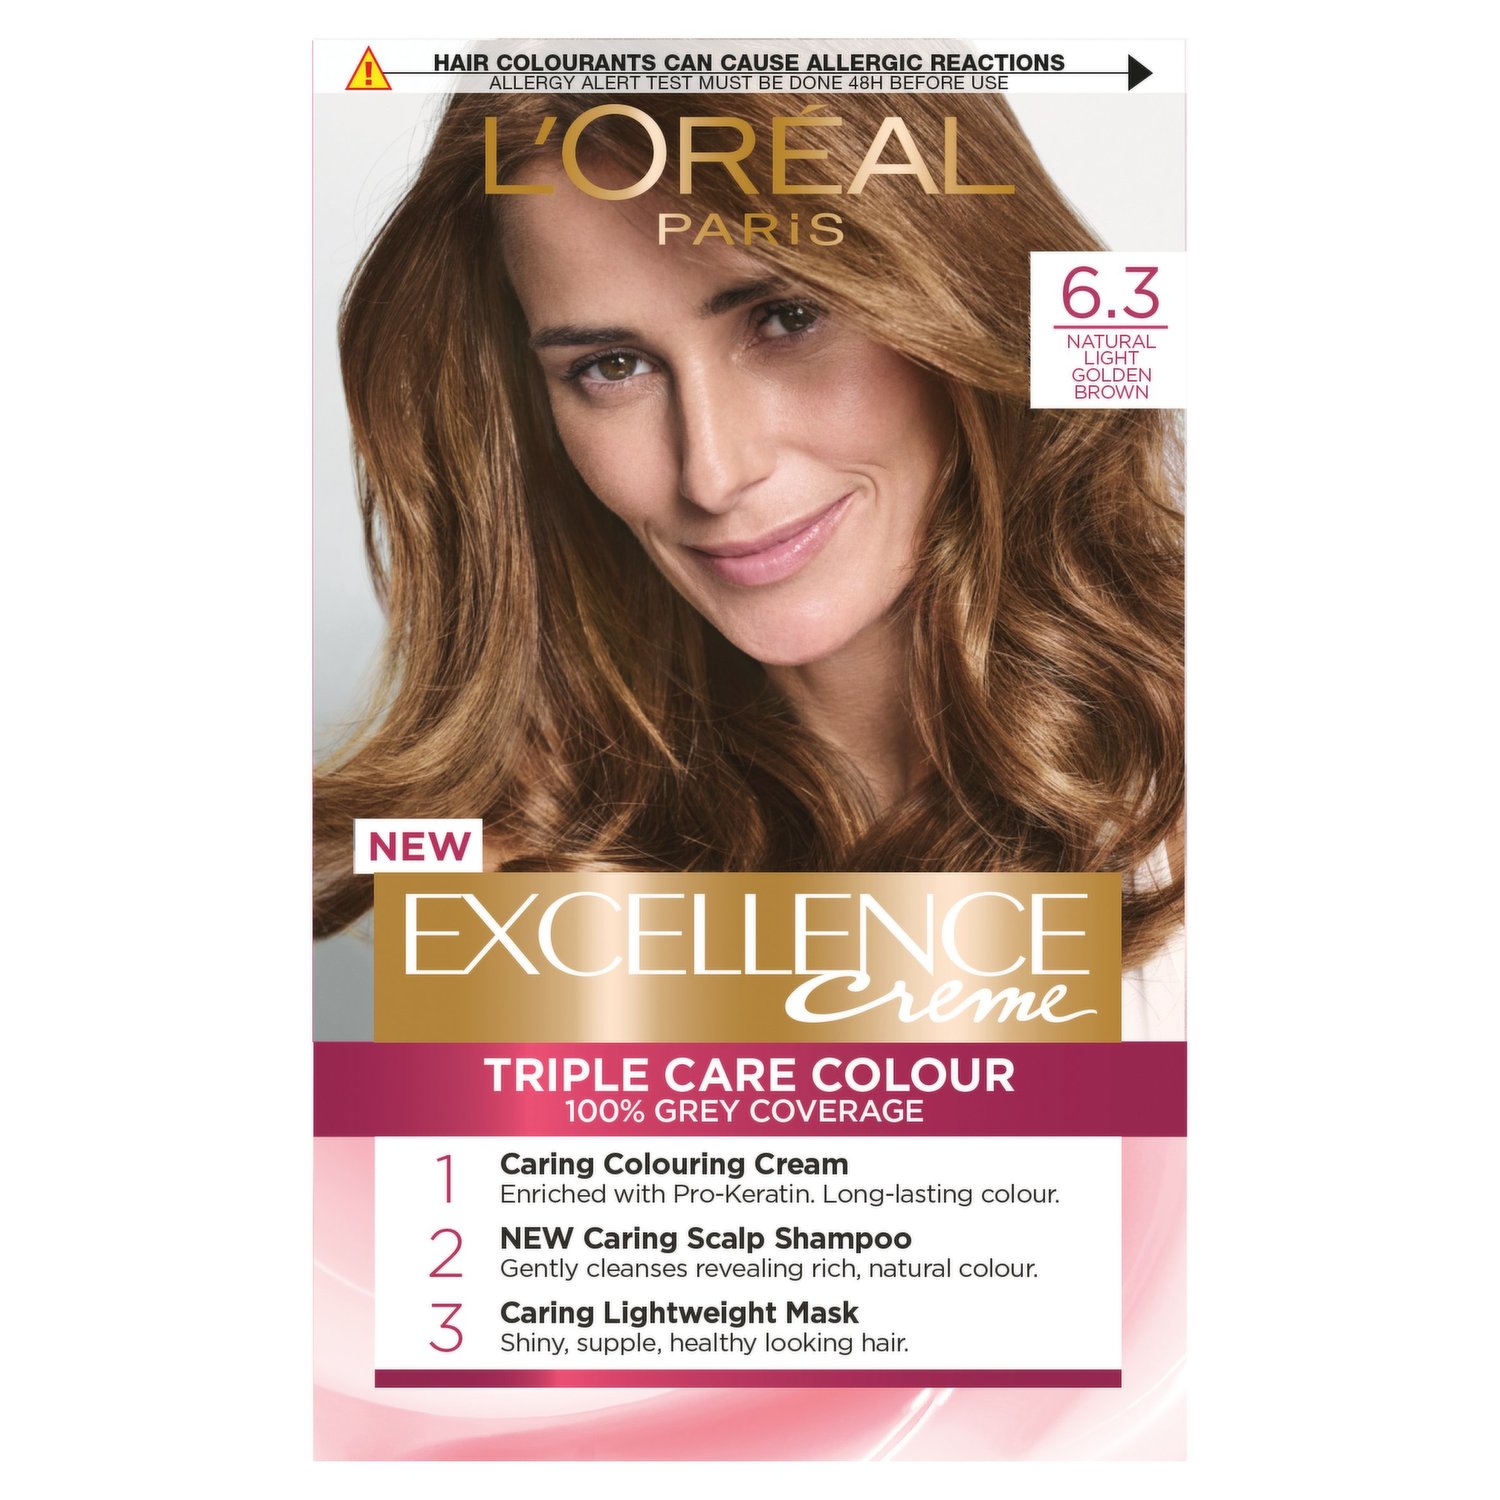 L'Oreal 6.3 Natural Light Golden Brown Permanent Hair Dye